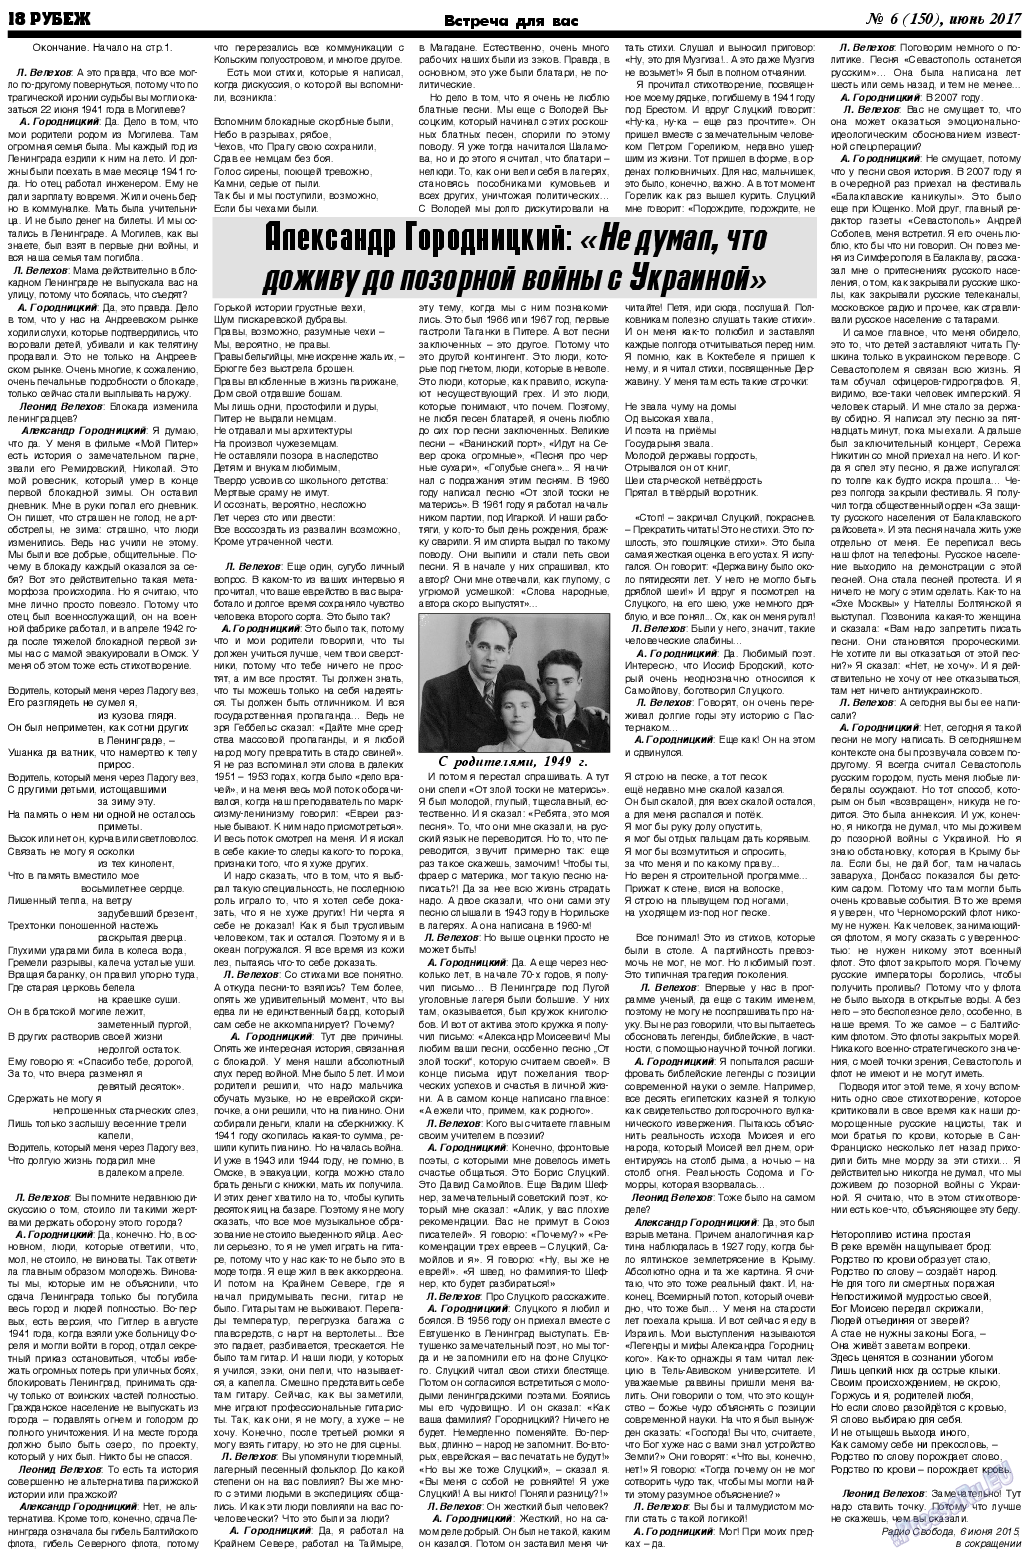 Рубеж, газета. 2017 №6 стр.18